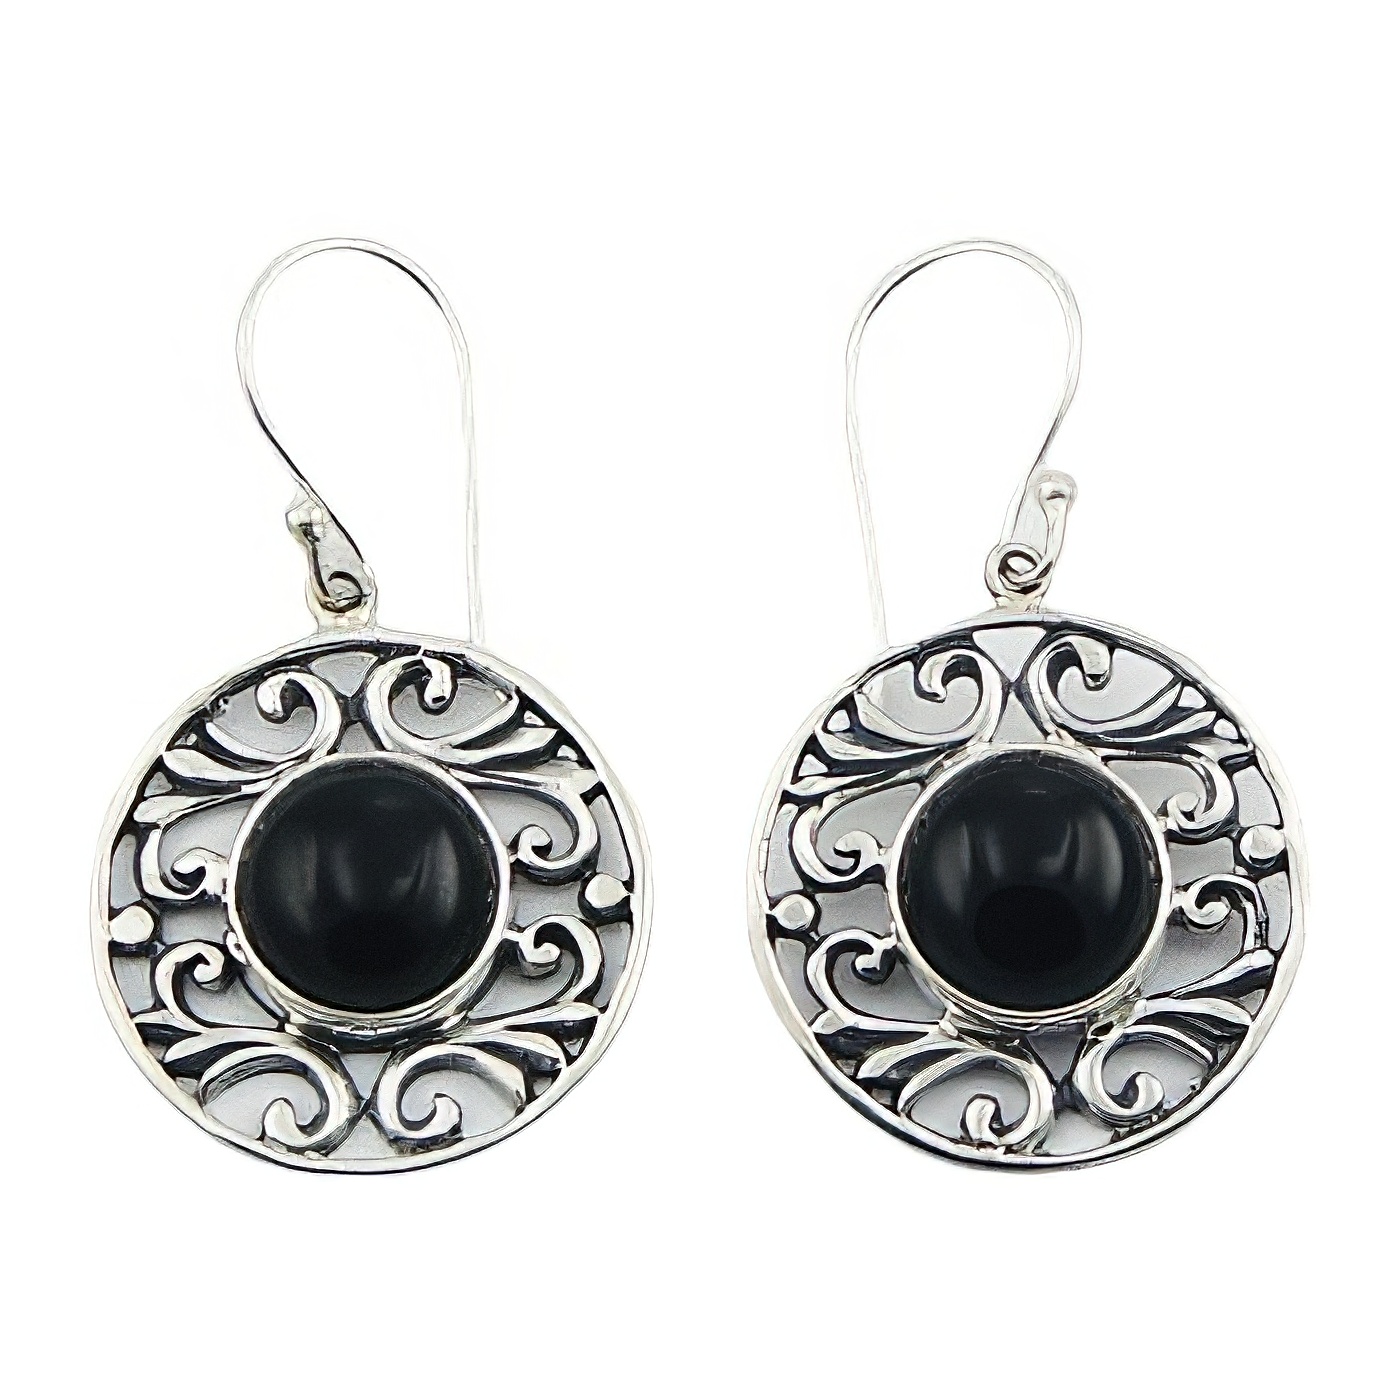 Romantic black agate ajoure hand soldered ornate sterling silver earrings by BeYindi 